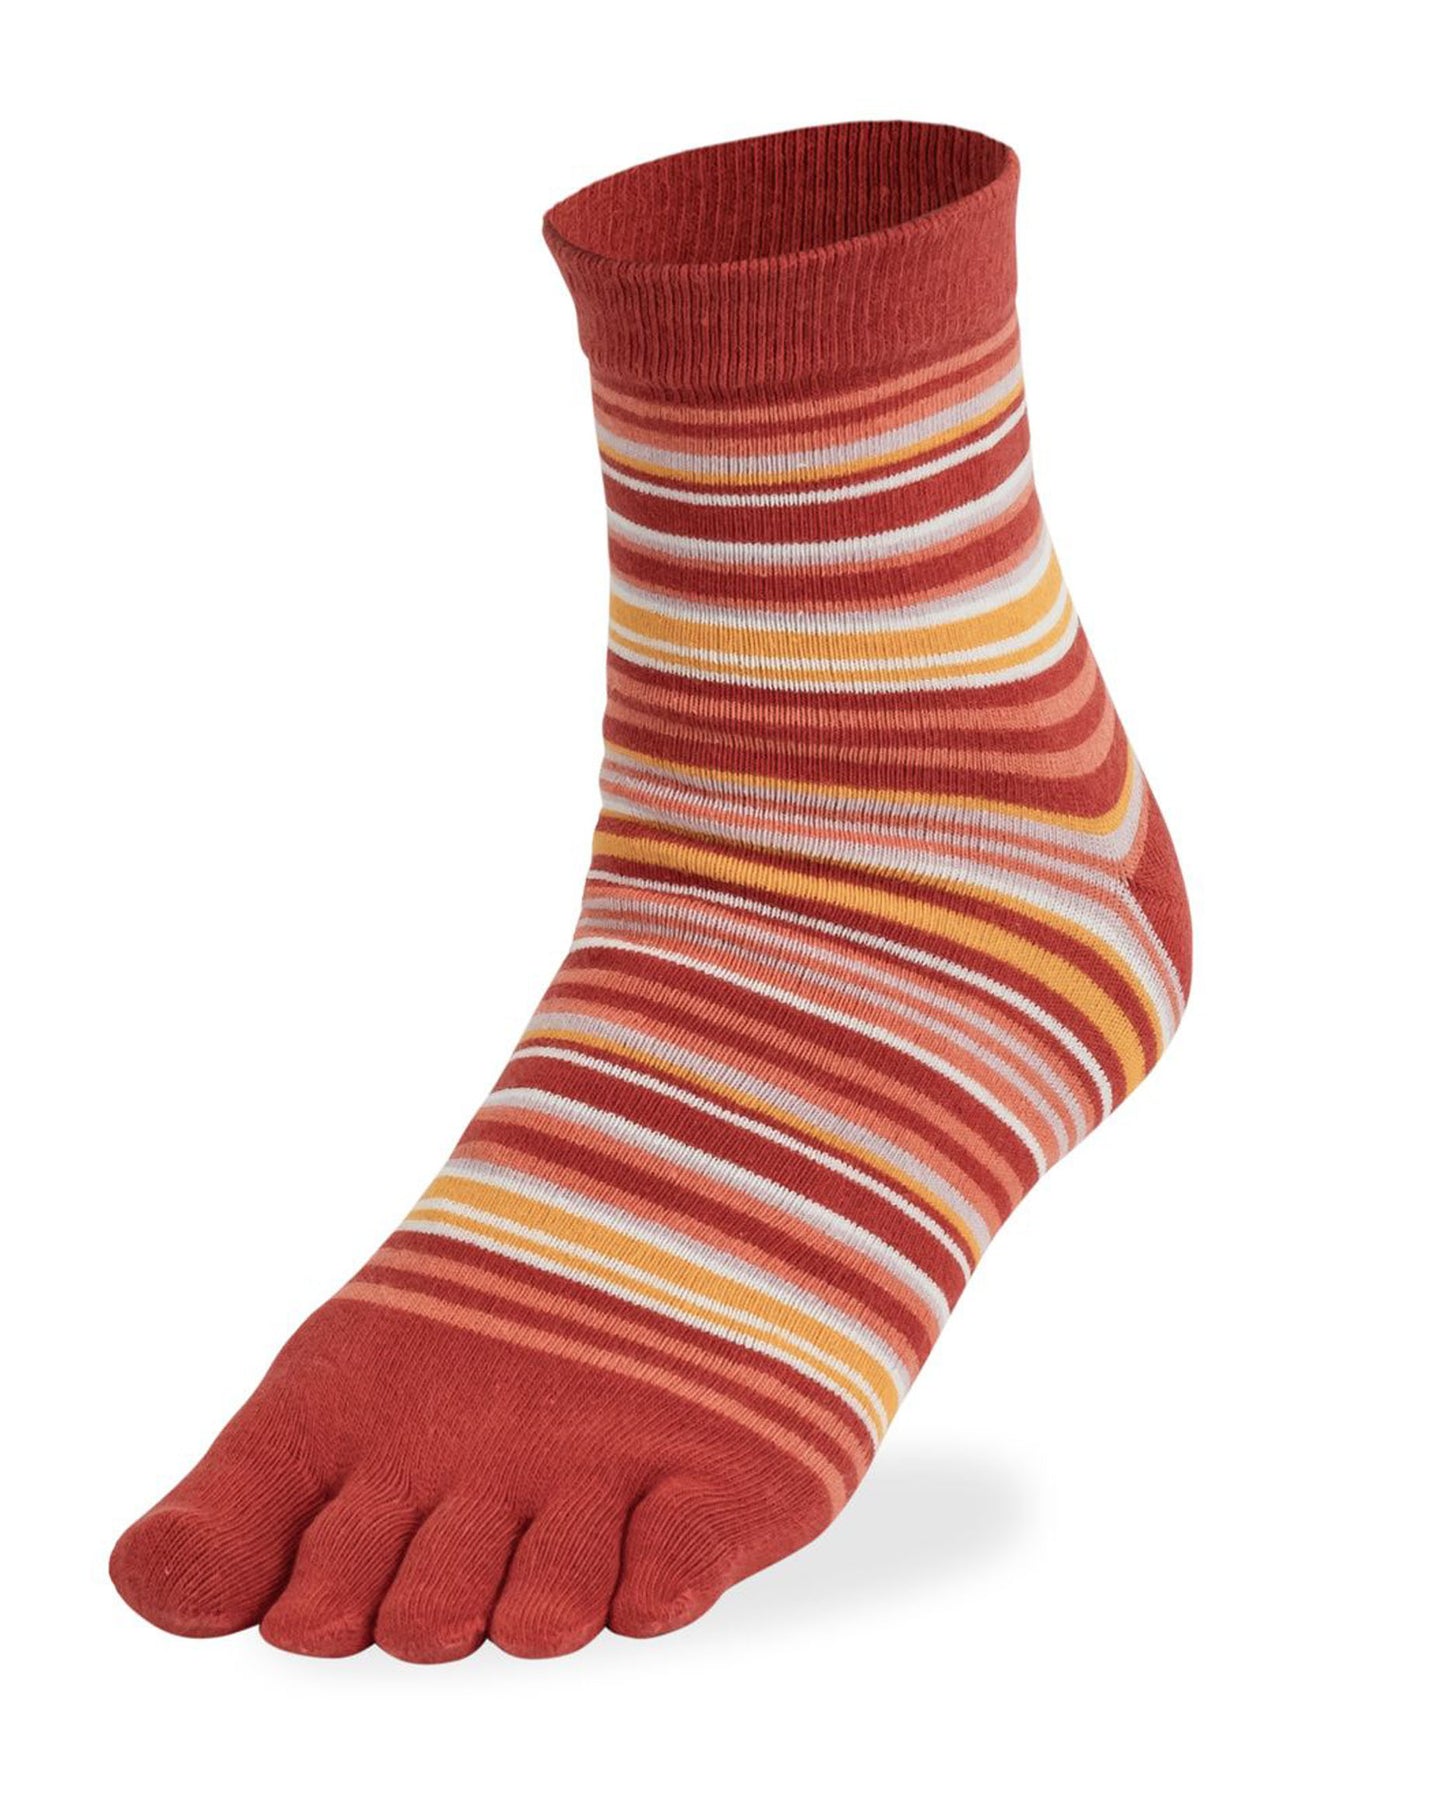 Bonnie Doon Toe Sock Funky Stripes - Orange, peach, mustard and white horizontal striped crew length cotton mix toe socks.